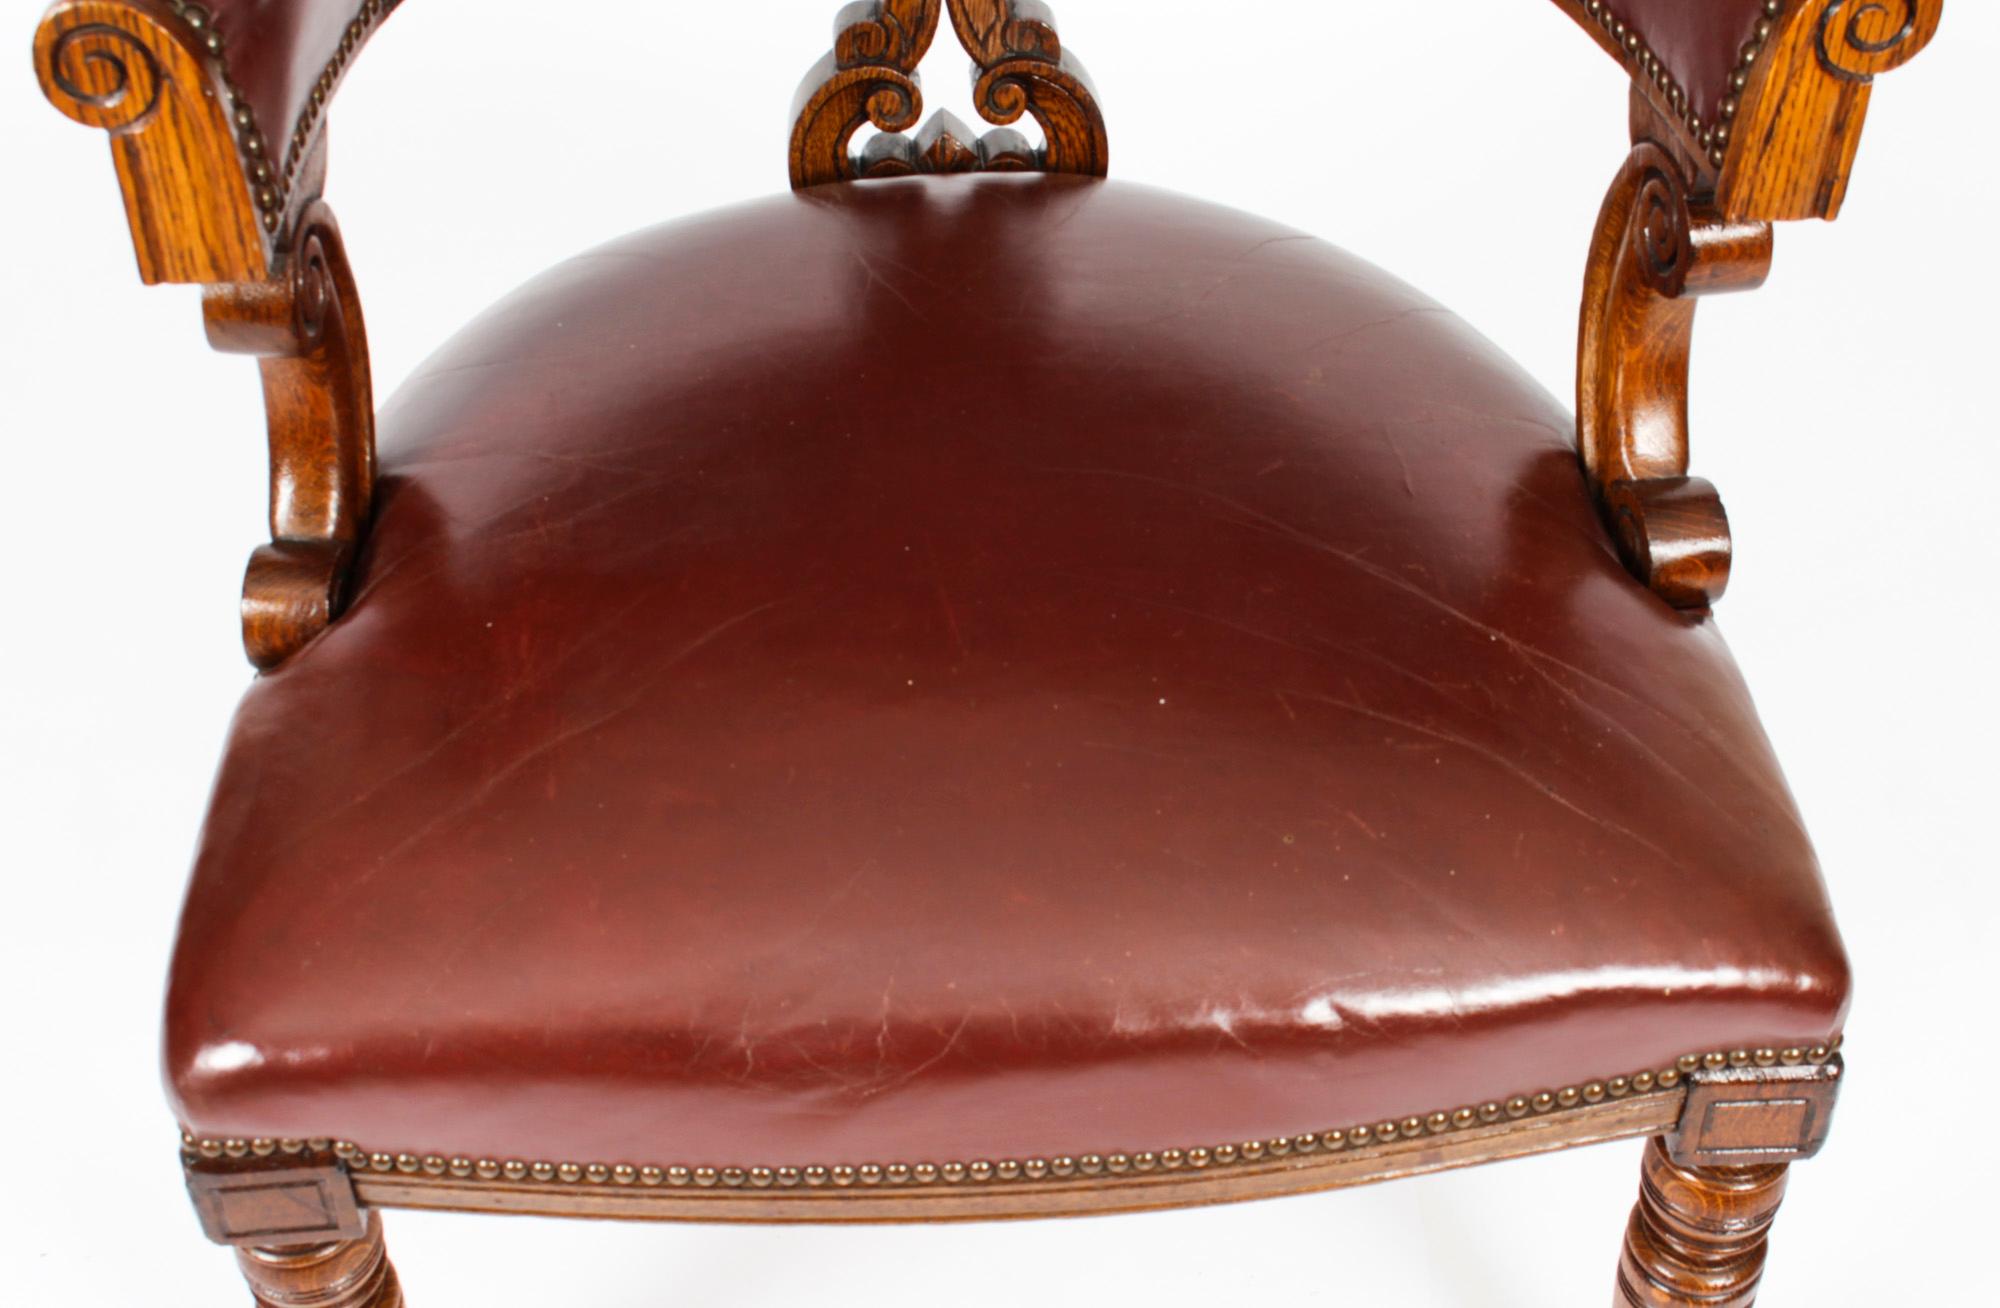 Antique Victorian Oak Leather Desk Chair Tub Chair 19th Century For Sale 2